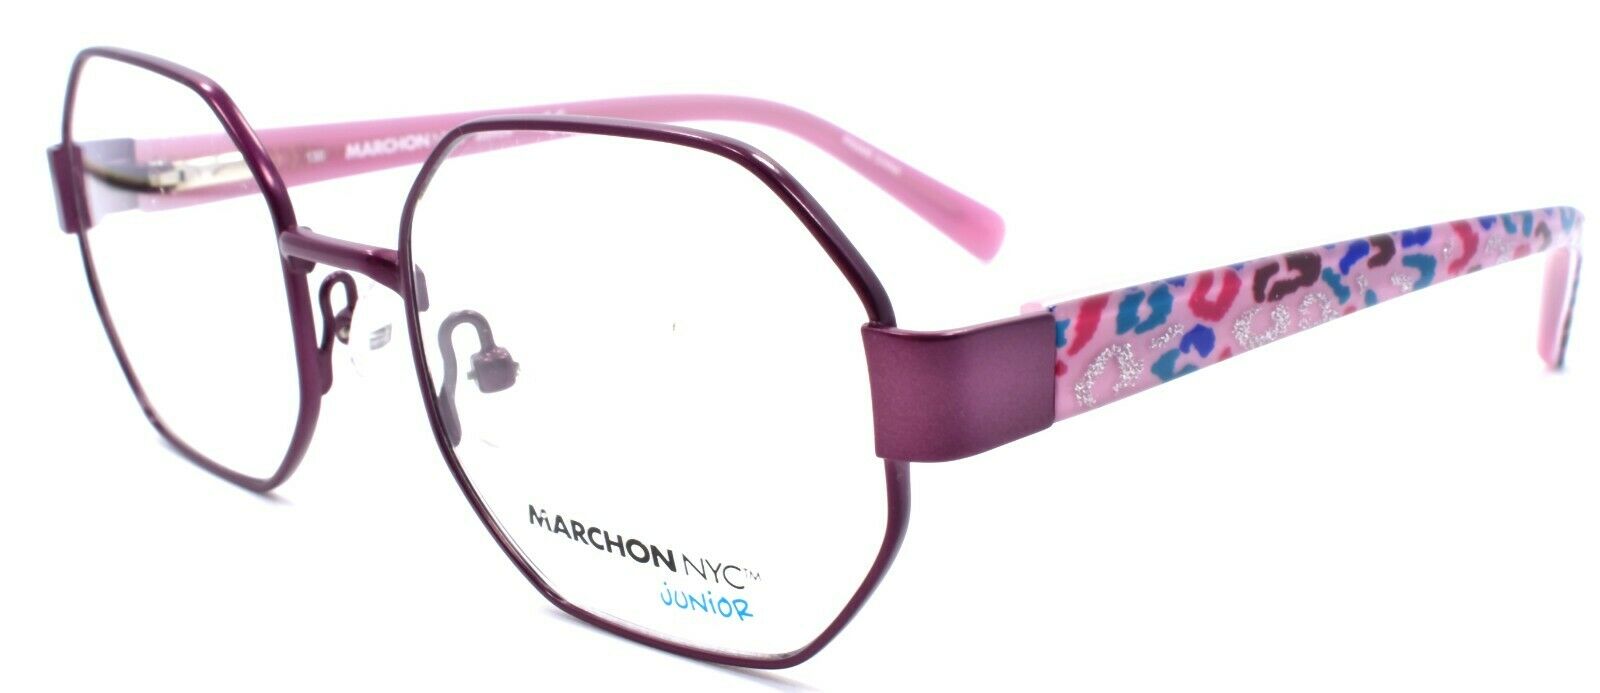 1-Marchon M-7001 505 Kids Girls Eyeglasses Frames Octagon 46-17-130 Plum-886895430333-IKSpecs